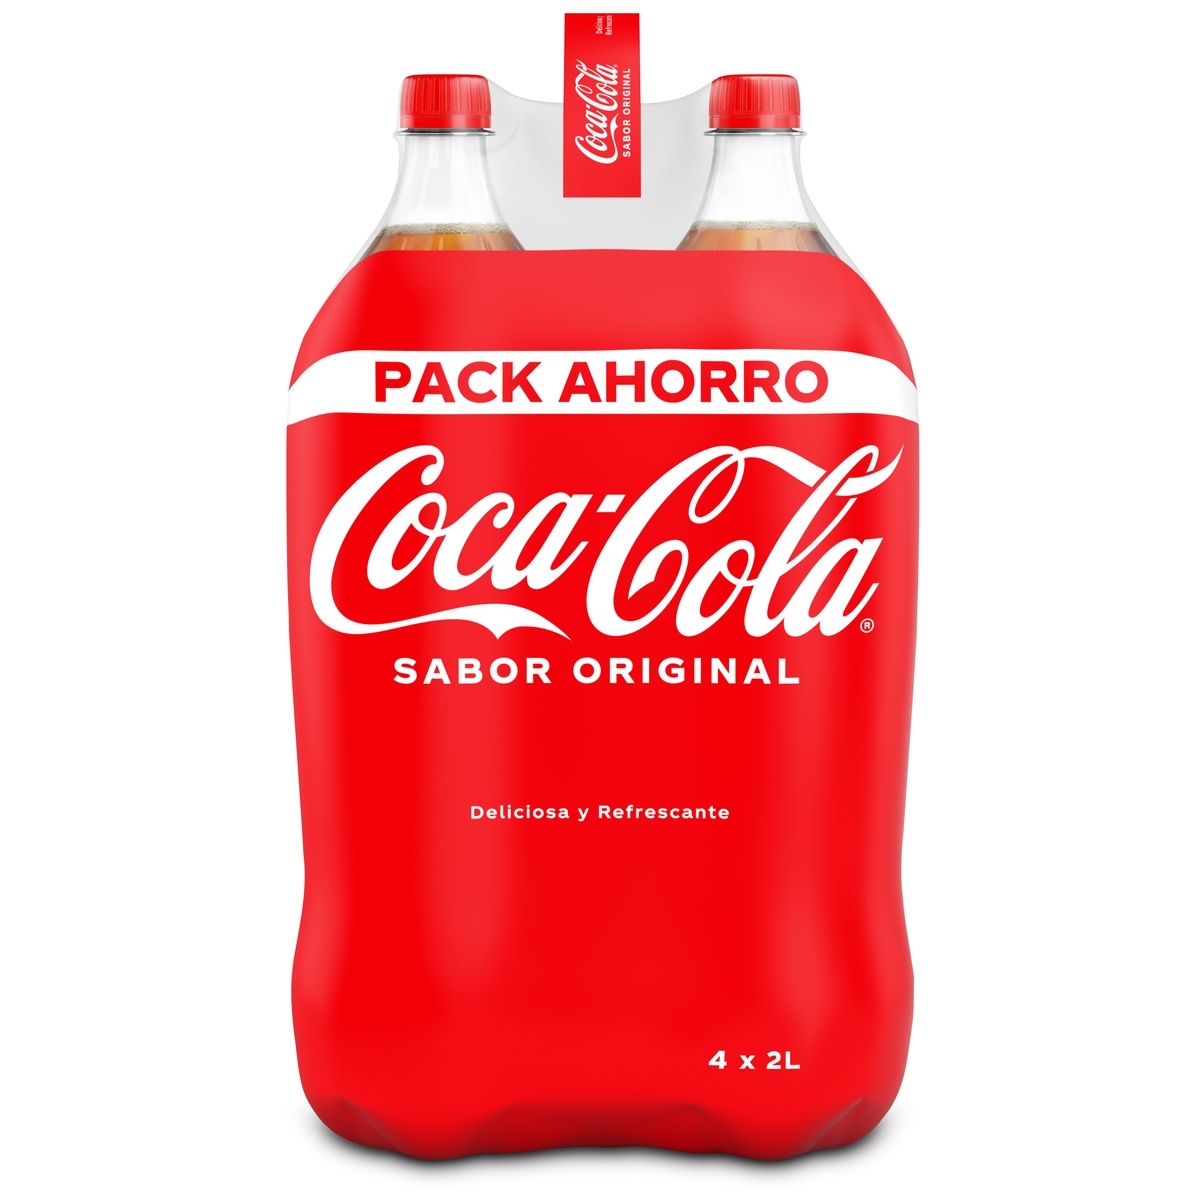 HOLA COLA Refresco de cola hola cola pack 4 unidades Botella 2 lt